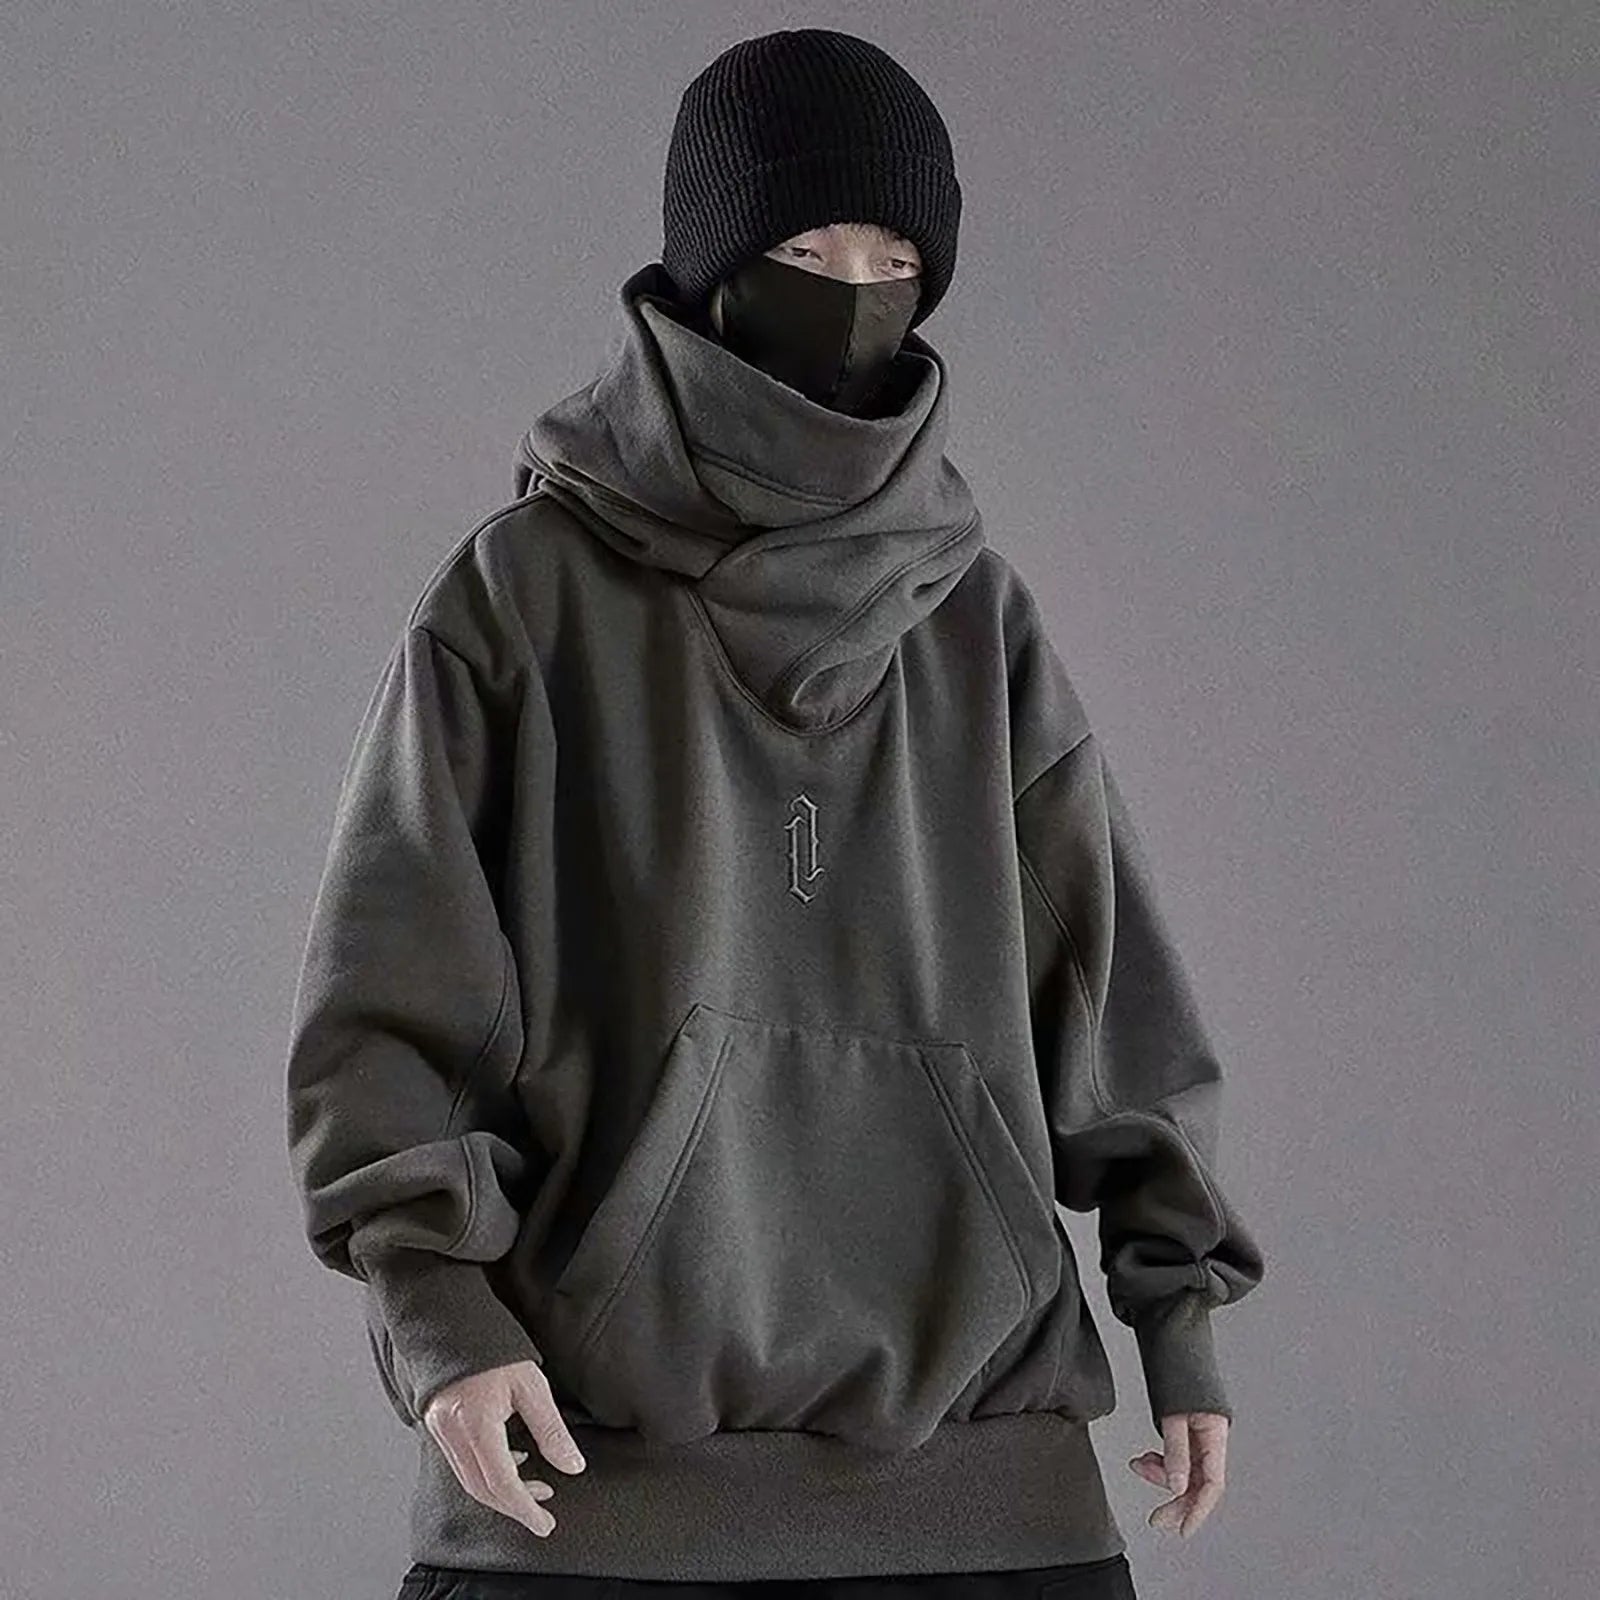 Sweatshirt For Men Male Ninja Style Japanese Hoodie Autumn Winter Solid Turtleneck Long Sleeve Hoodie Pocket Punk Oversize Tops